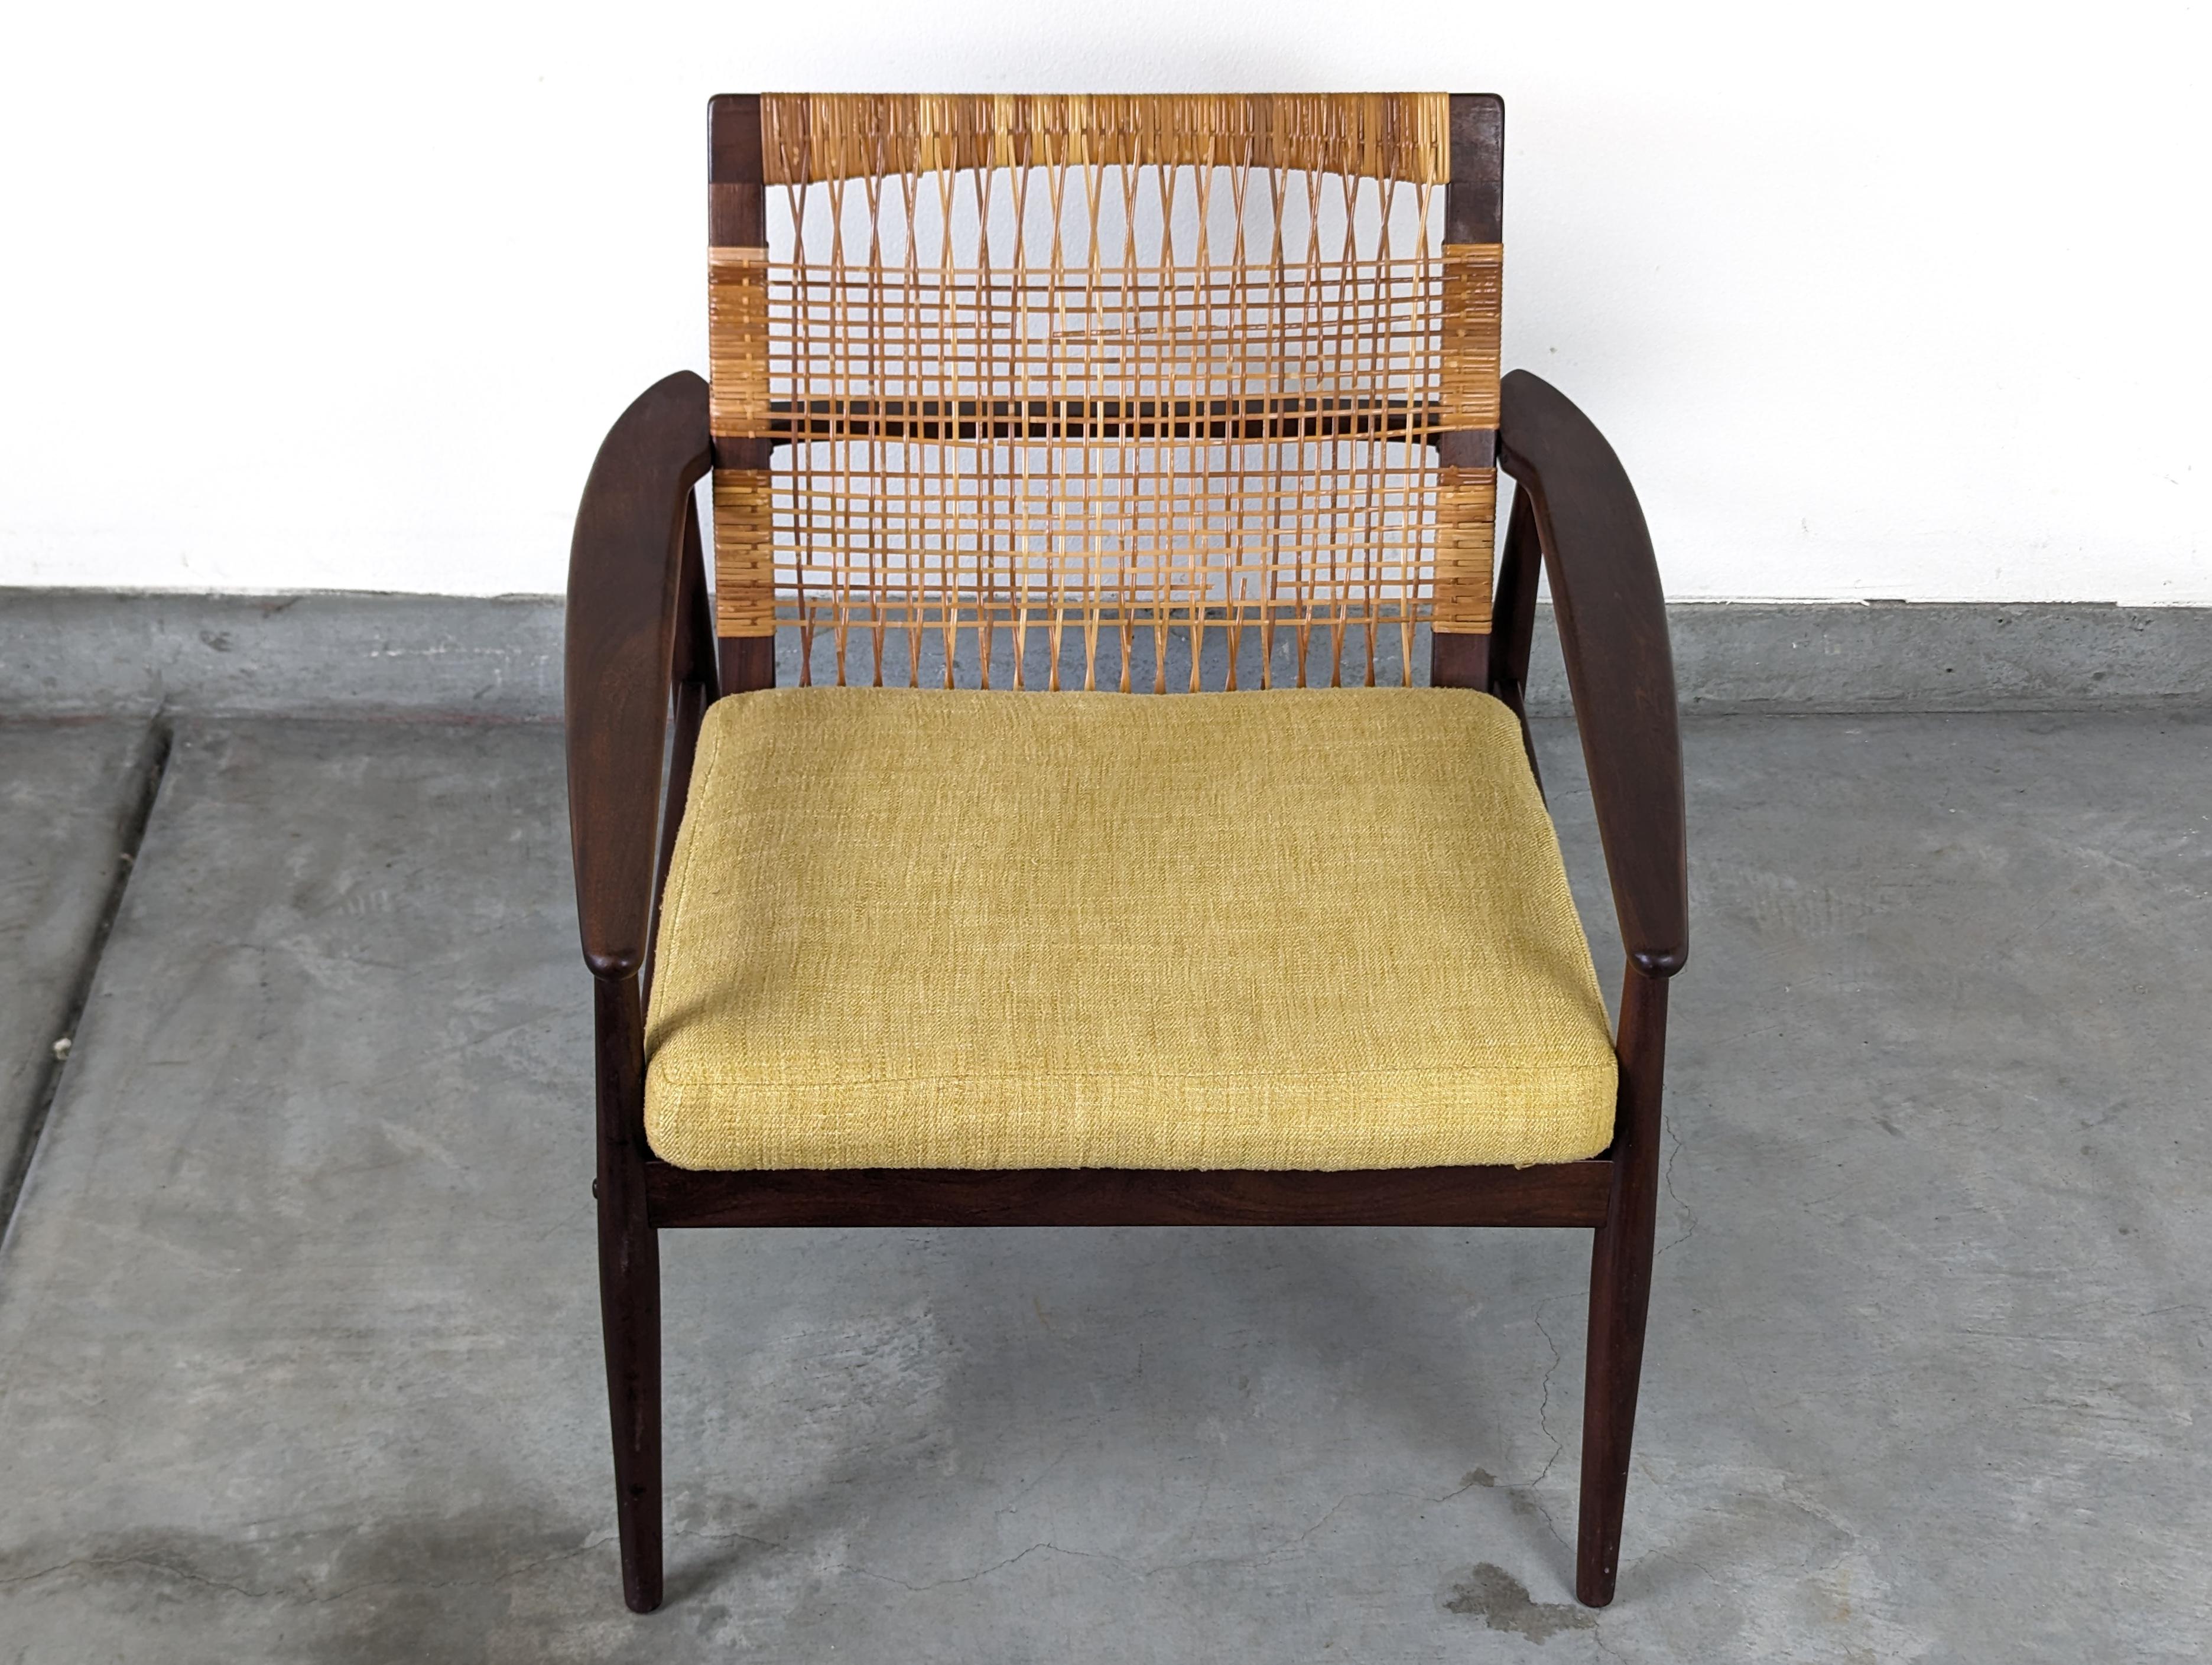 Woven Mid Century Cane Lounge Chair by Hans Olsen for Juul Kristensen, c1960s